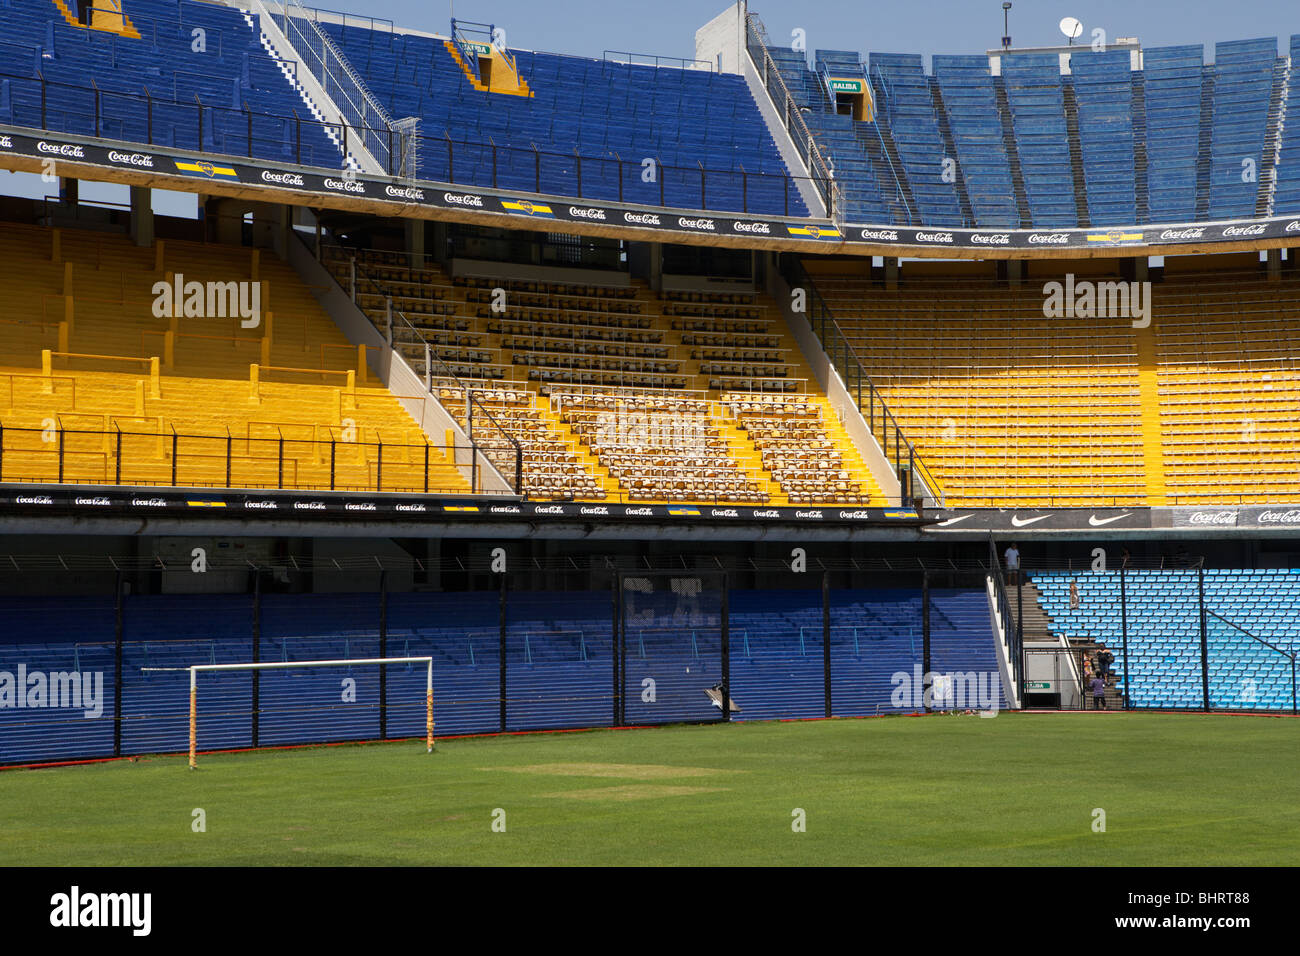 pitch and stand interior of Alberto J Armando la bombonera stadium home to atletico boca juniors football club Stock Photo